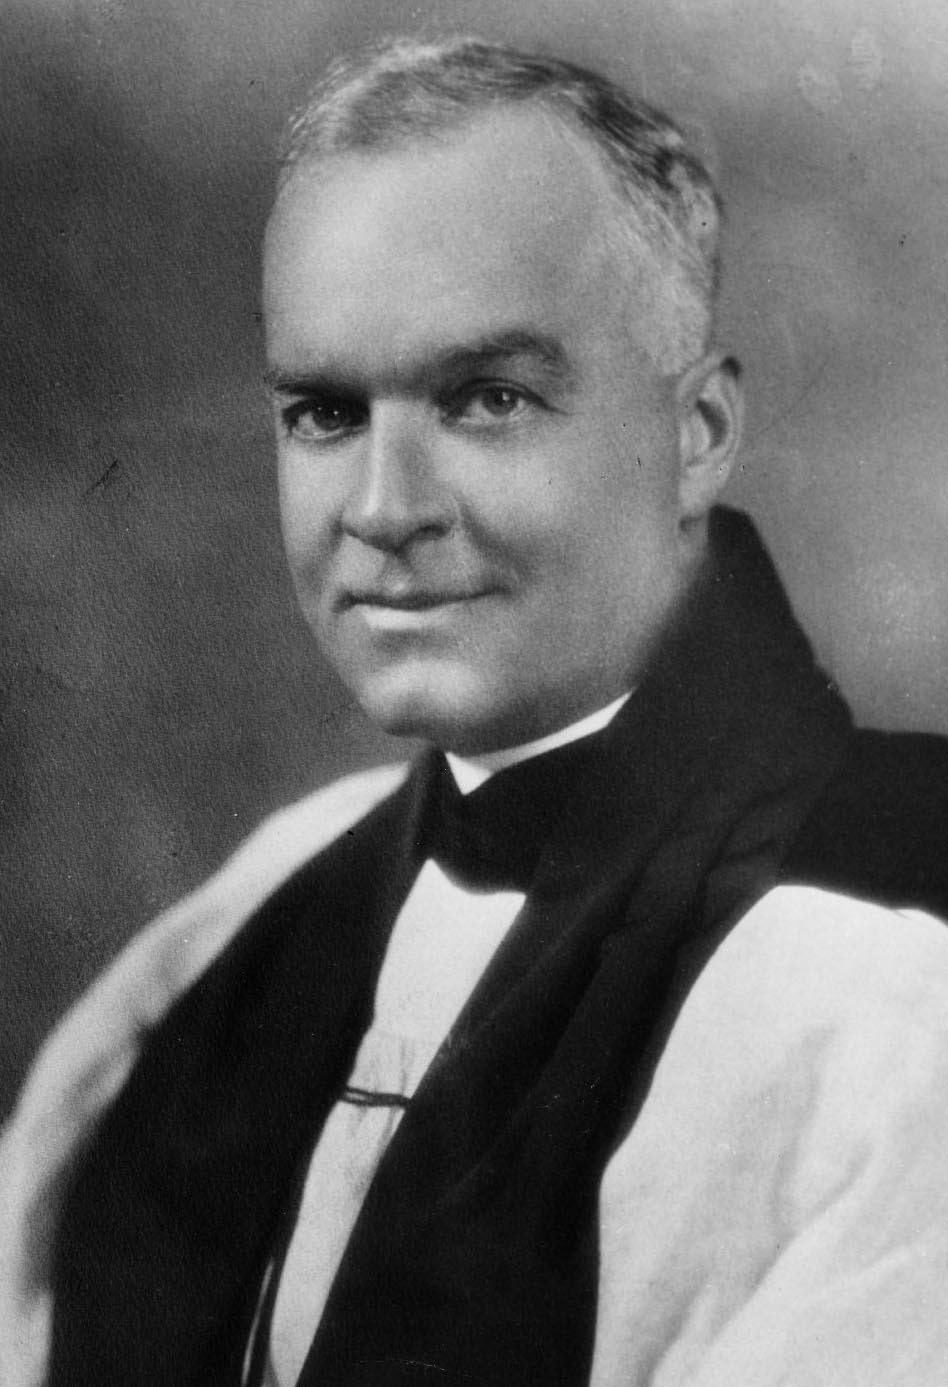 Bishop Middleton S. Barnwell